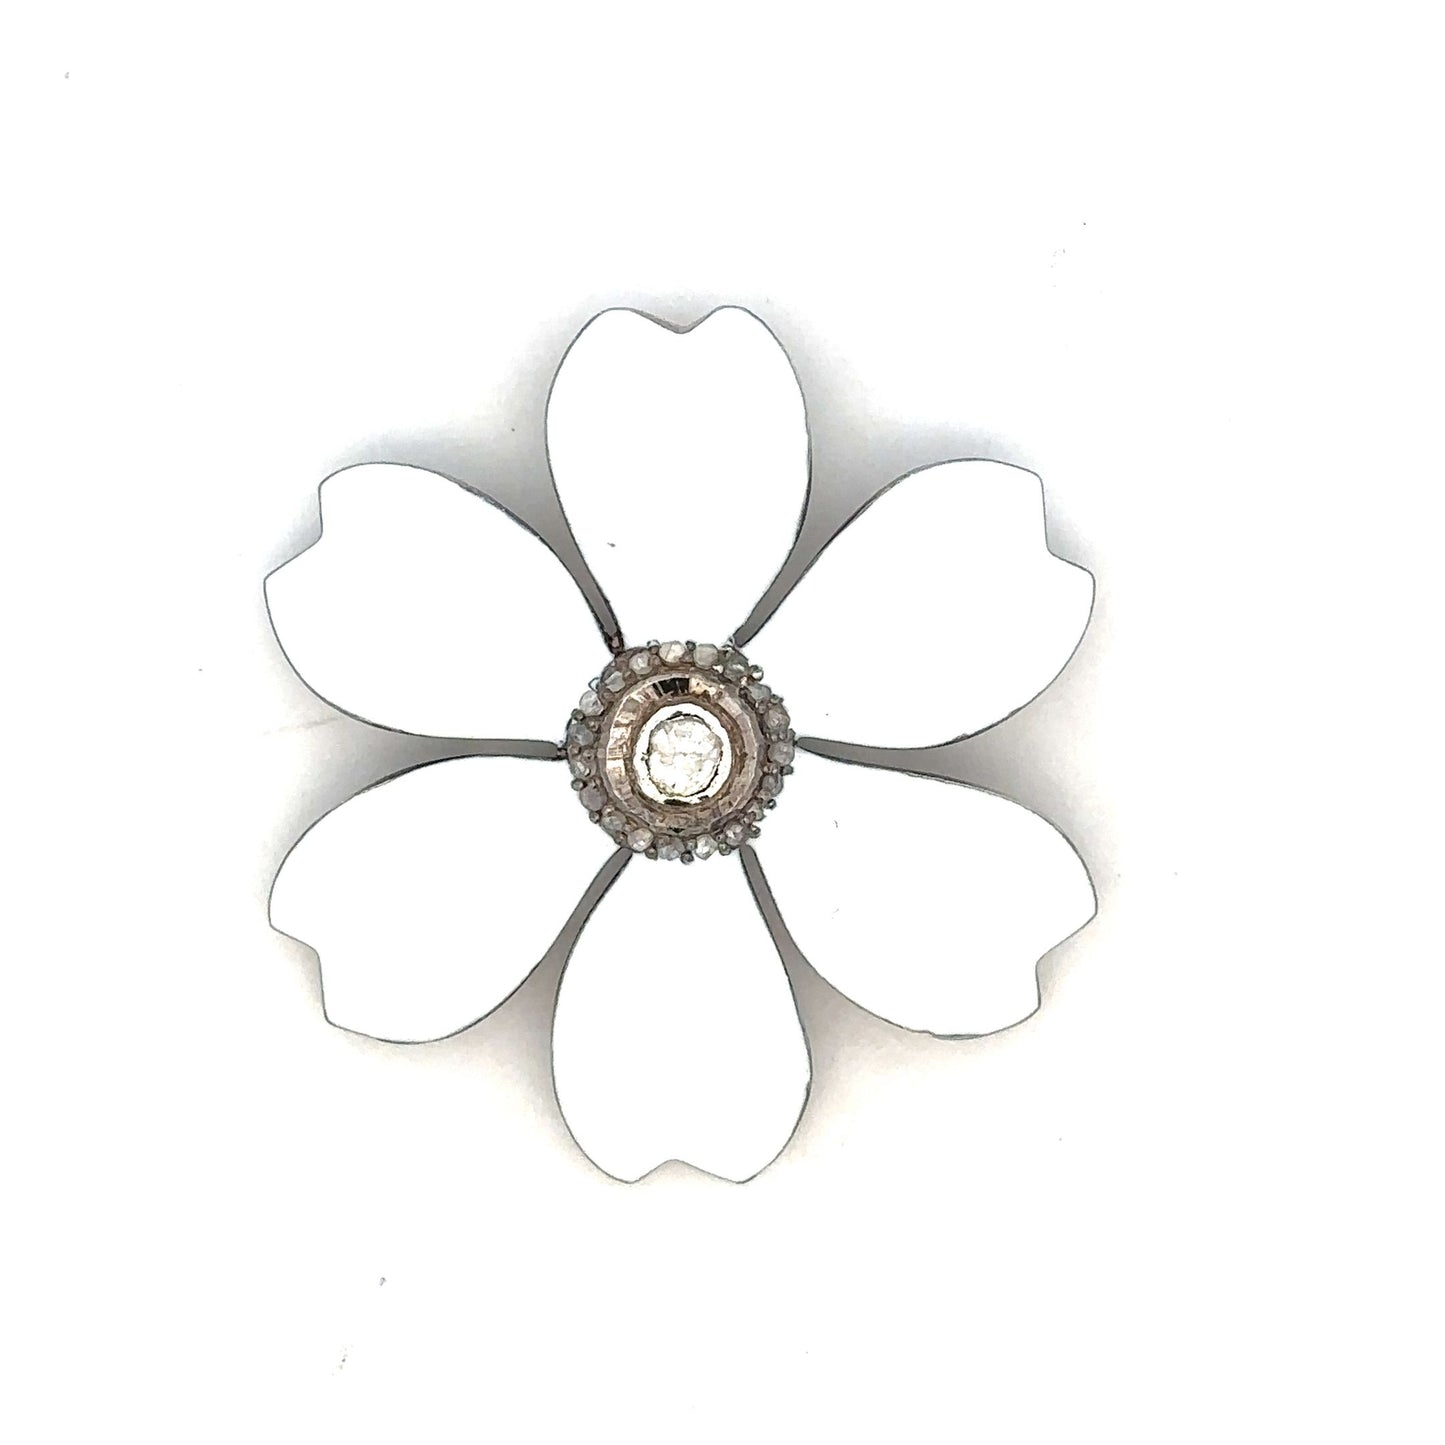 Sterling Enamel Flower Pendant with Rose Cut Diamond Center